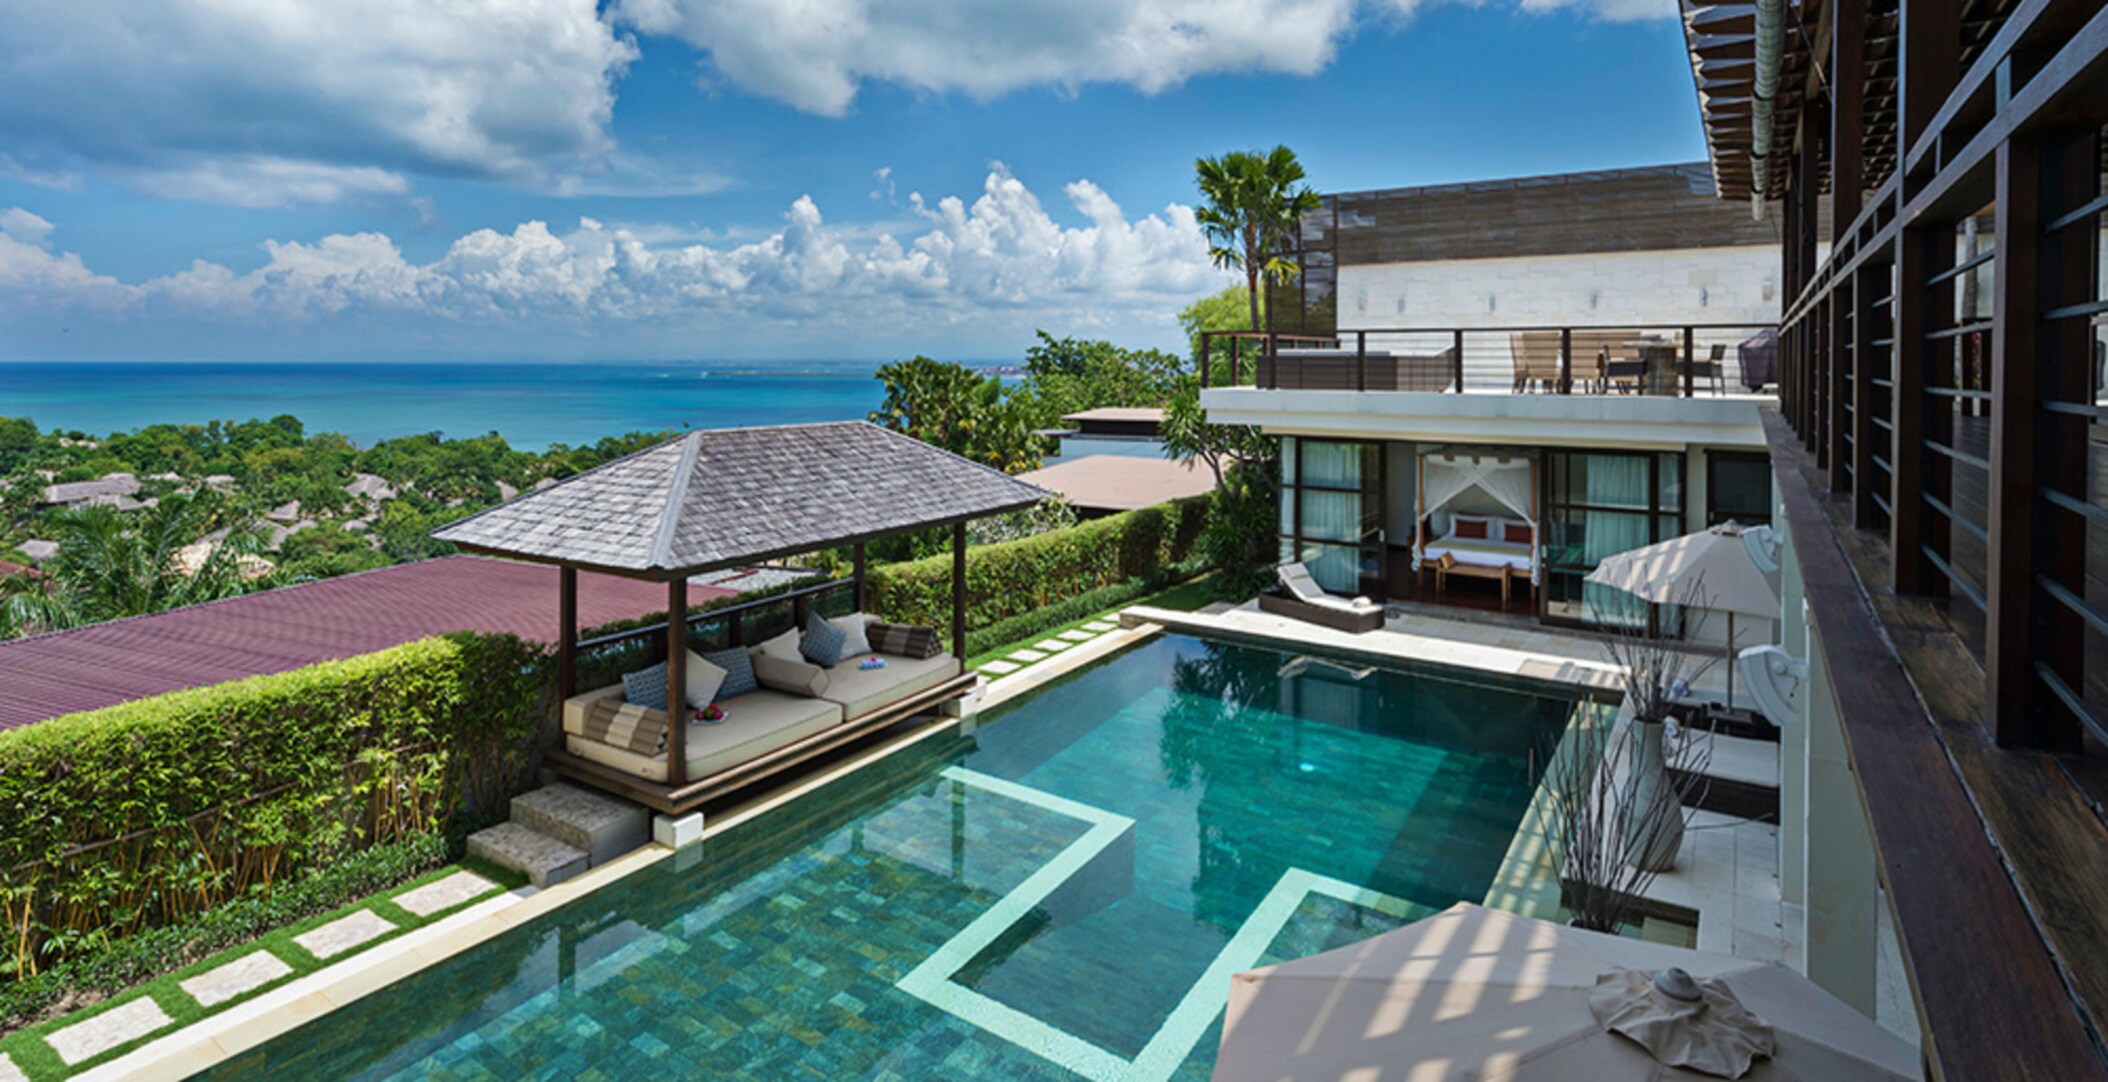 Property Image 2 - Property Manager Villa for Rent in Bali, Bali Villa 1035